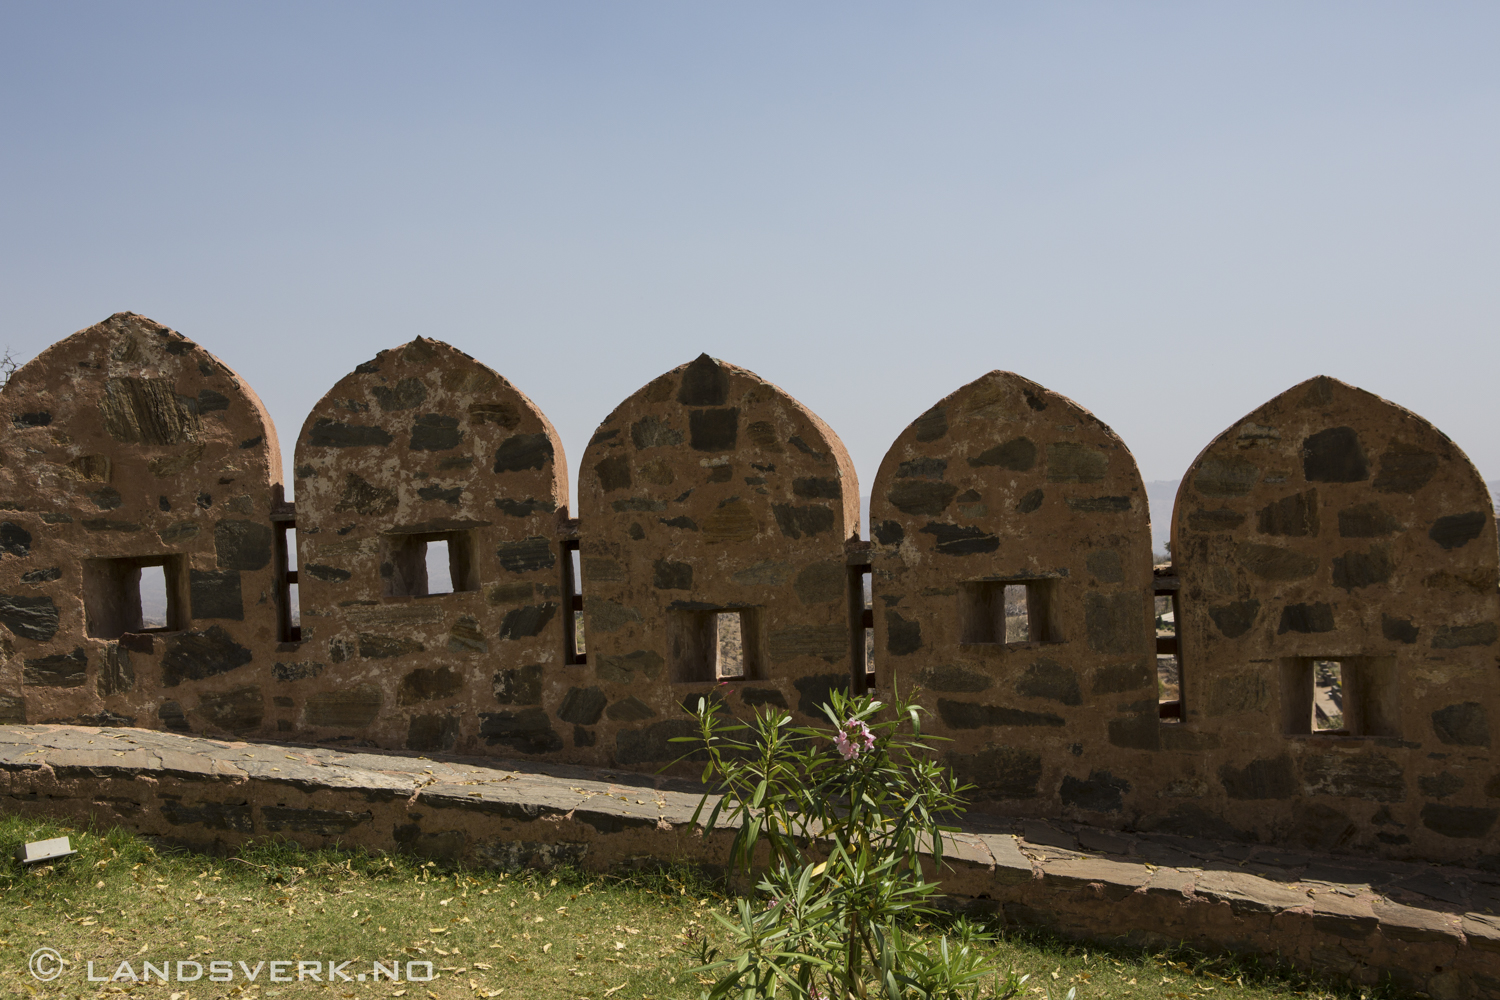 Kumbhalgarh Fort, India. 

(Canon EOS 5D Mark III / Canon EF 24-70mm f/2.8 L USM)